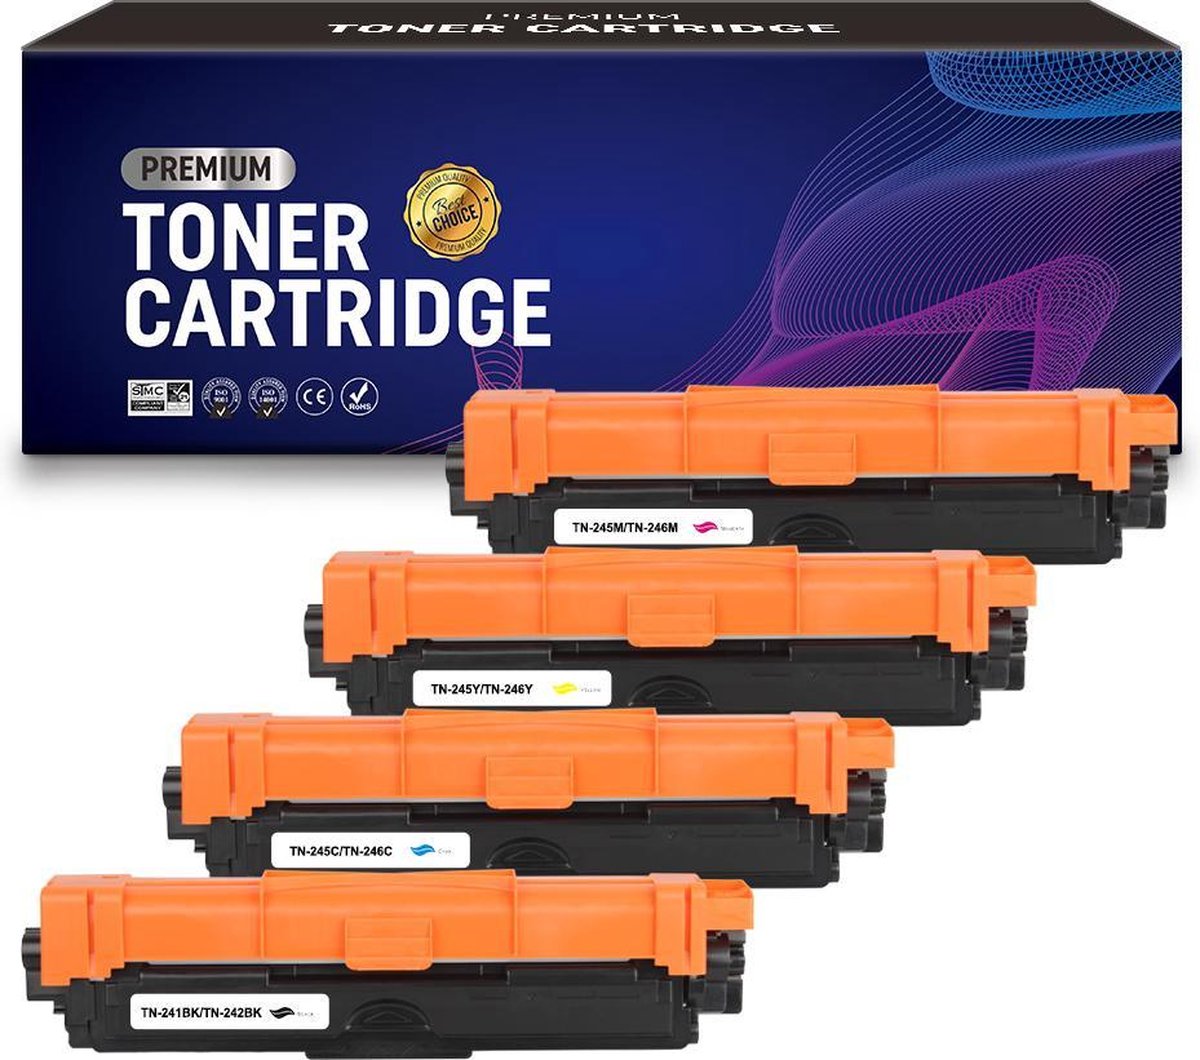 PREMIUM Compatibele Toner Cartridge voor TN-241BK TN 242BK TN-245C/M/Y TN-246C/M/Y combo-pakket(4 stuks) met Printer Brother HL-3140CW/3170CDW/MFC-9130CW/9330CDW/DCP-9020CDW